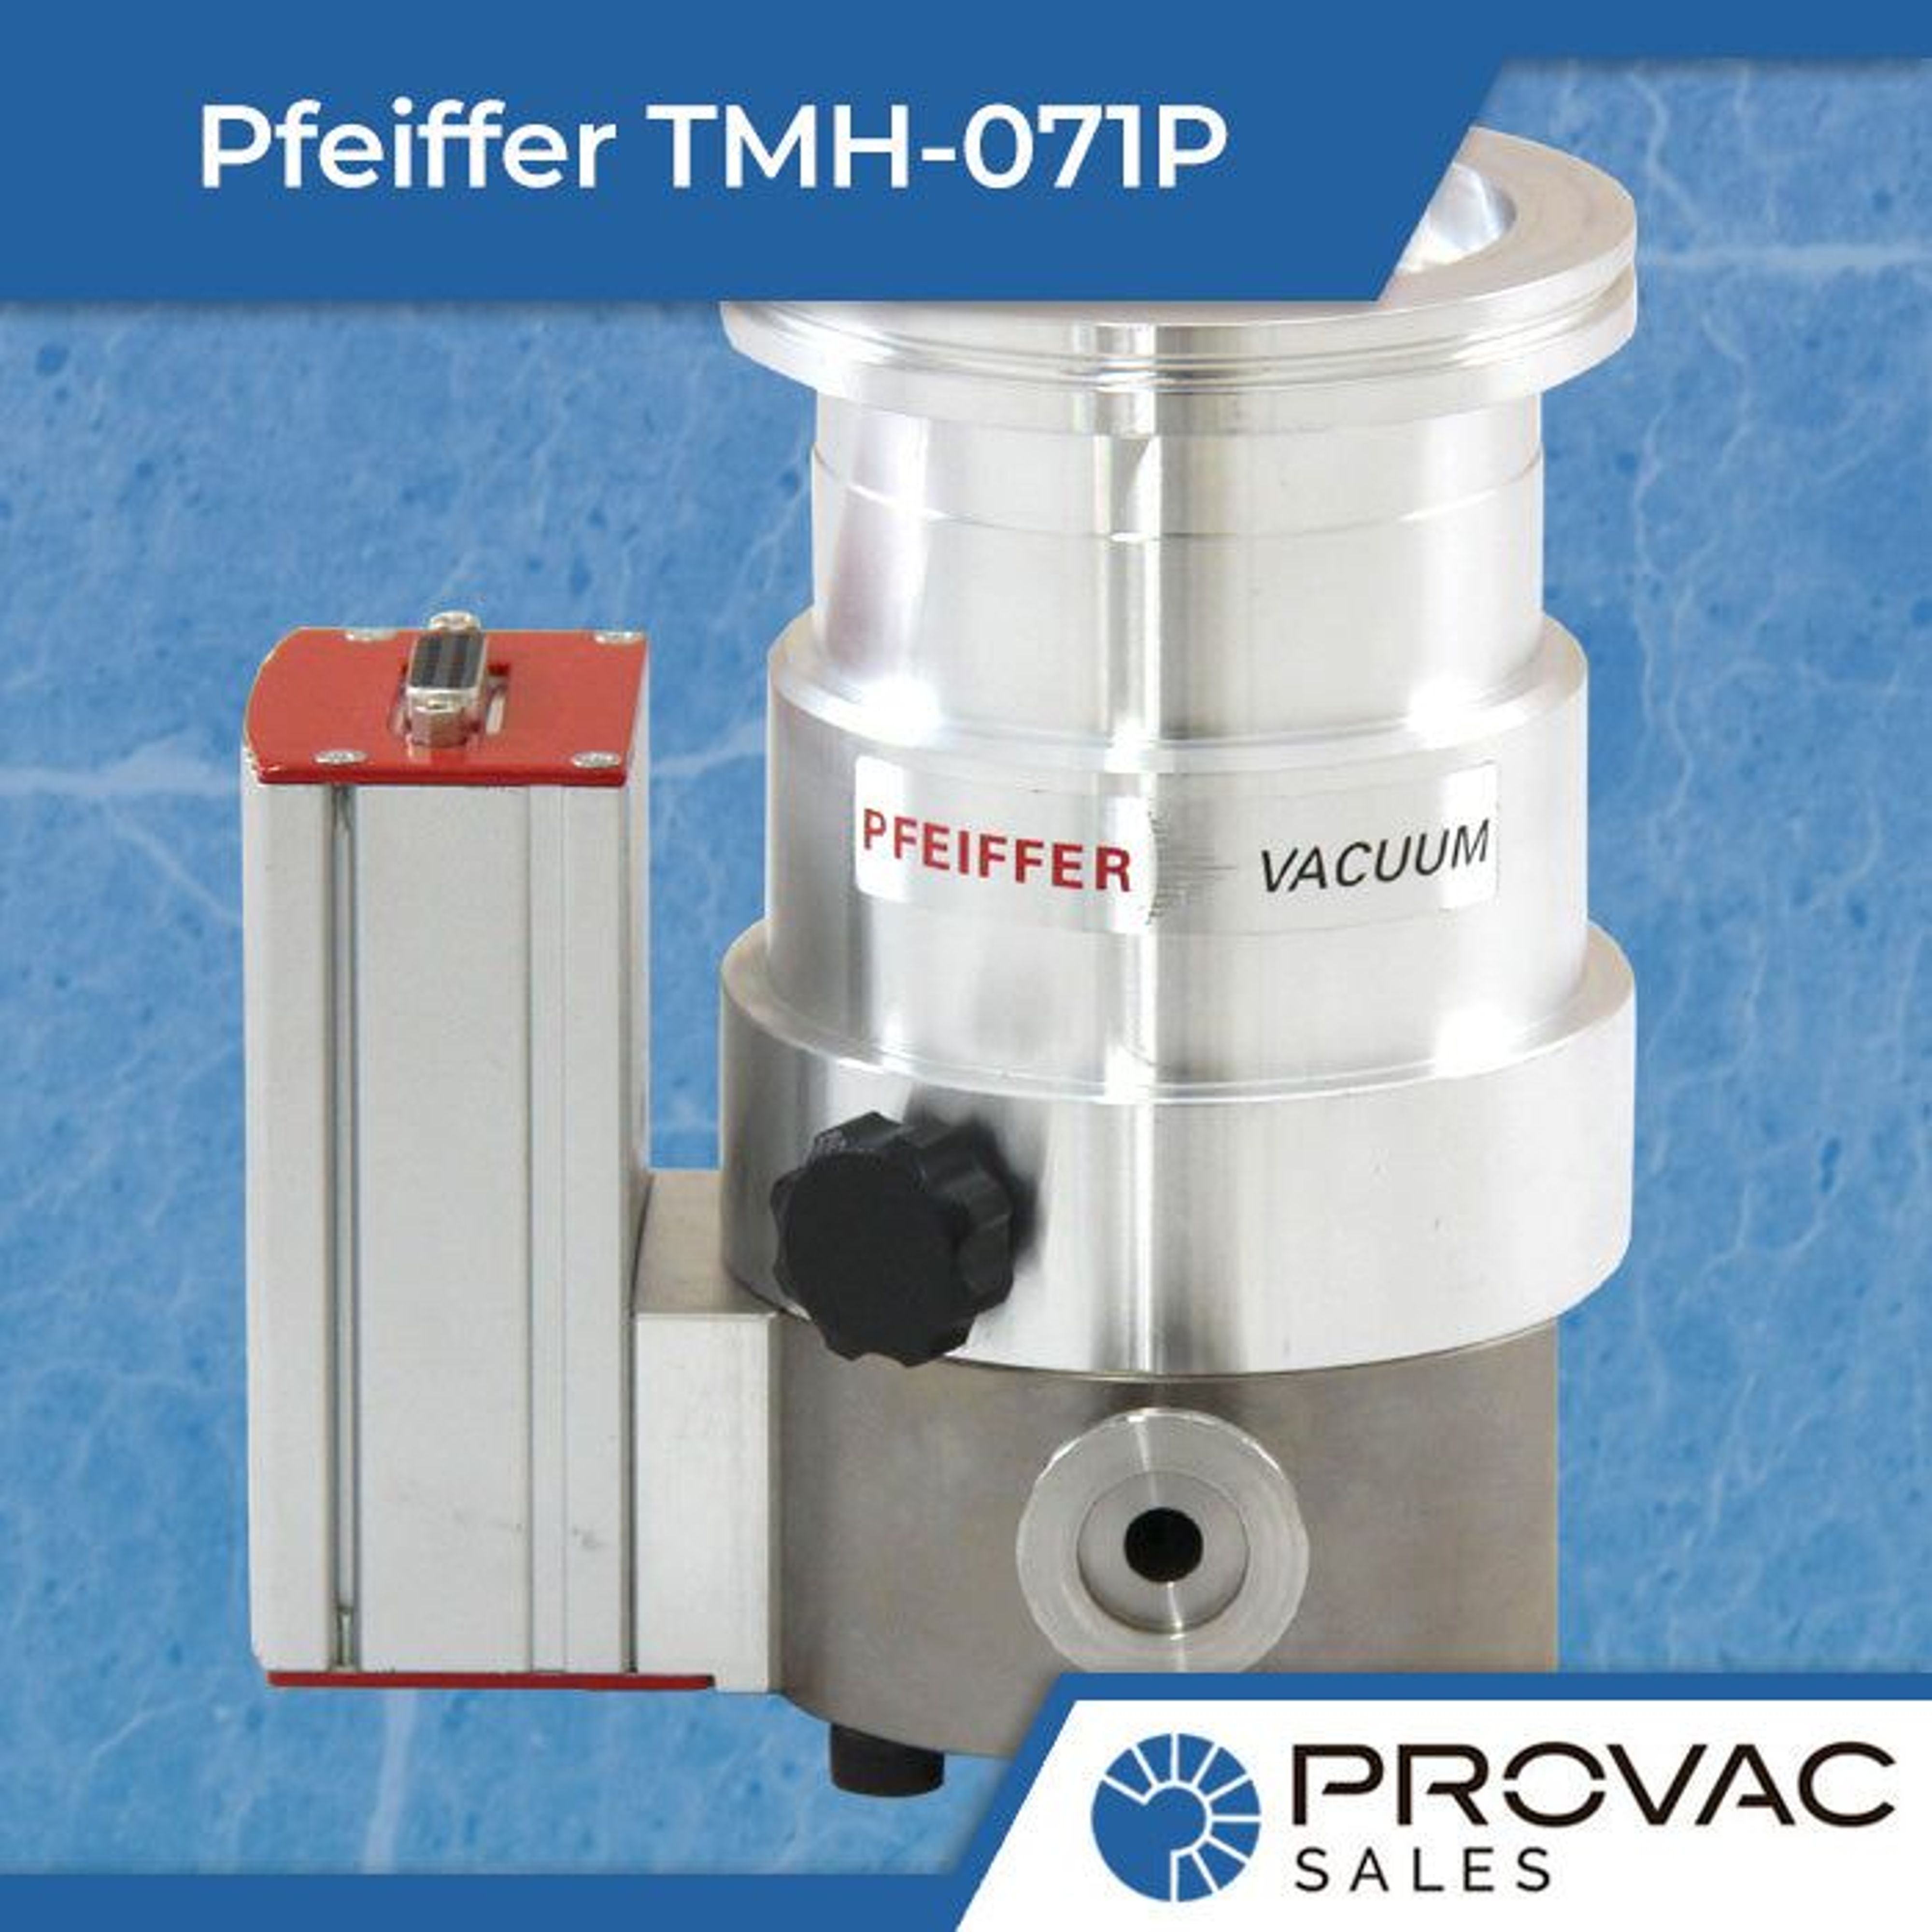 Pfeiffer TMH-071P Turbo Drag Pump Background